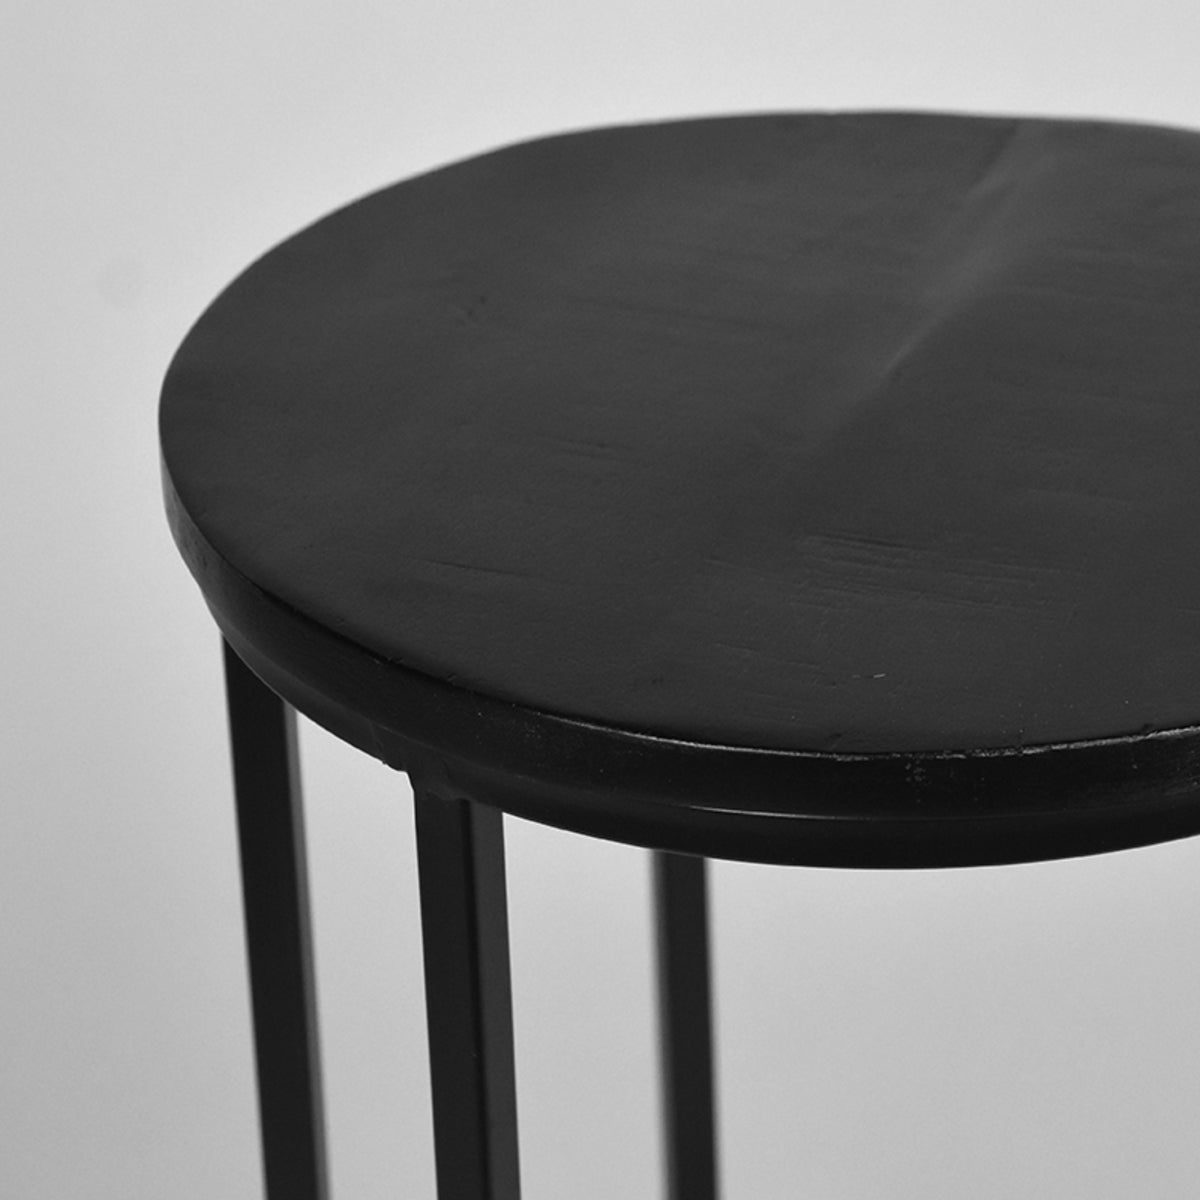 LABEL51 Motion side table - Black - Mango wood